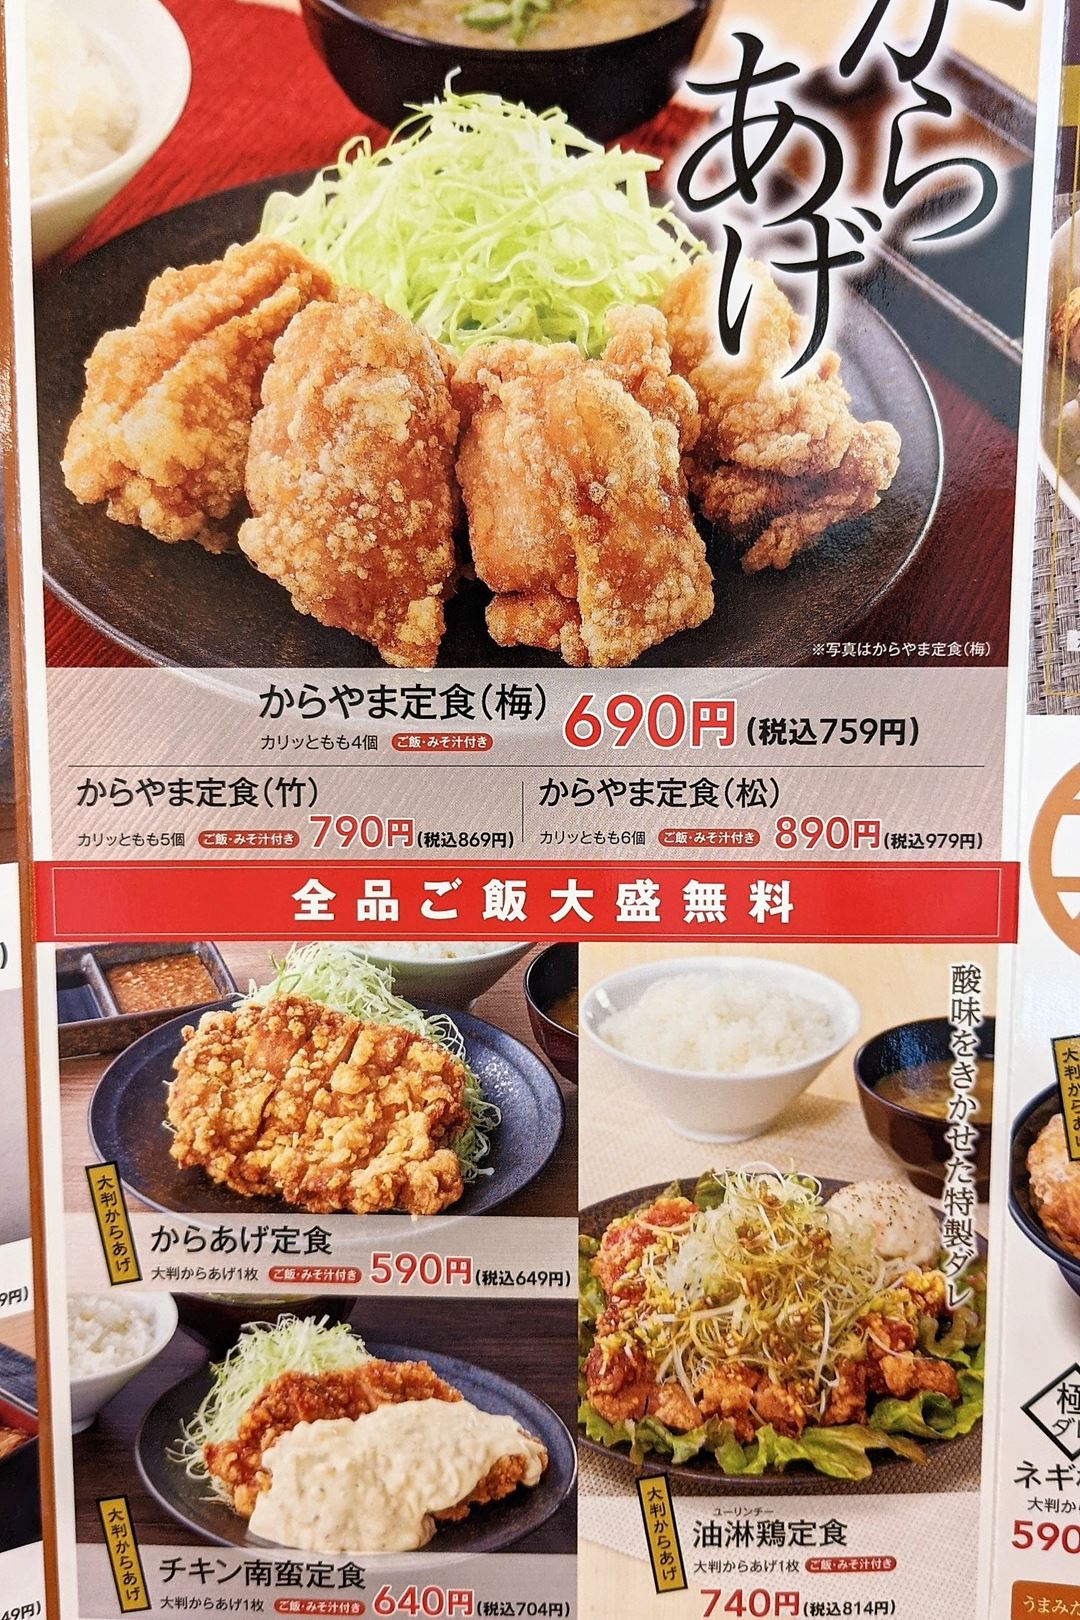 Menu メニュー 2021 - 唐揚げ Deep fried chicken KARAYAMA からあげ からやま